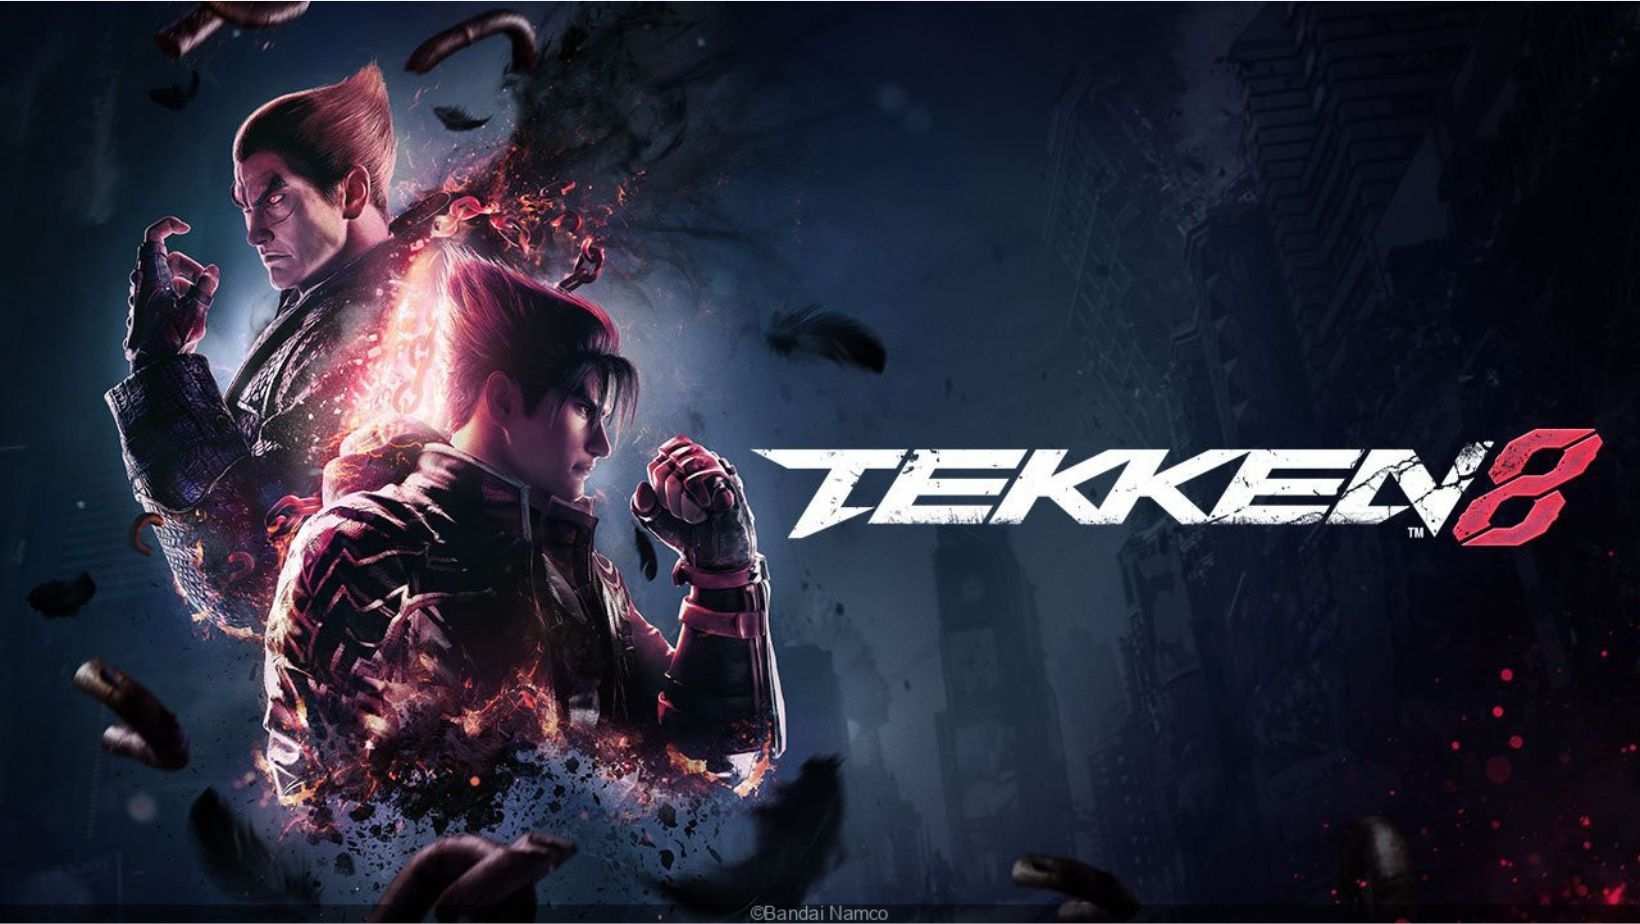   How to Unlock Tekken 8 Demo Practice Mode? Check Out